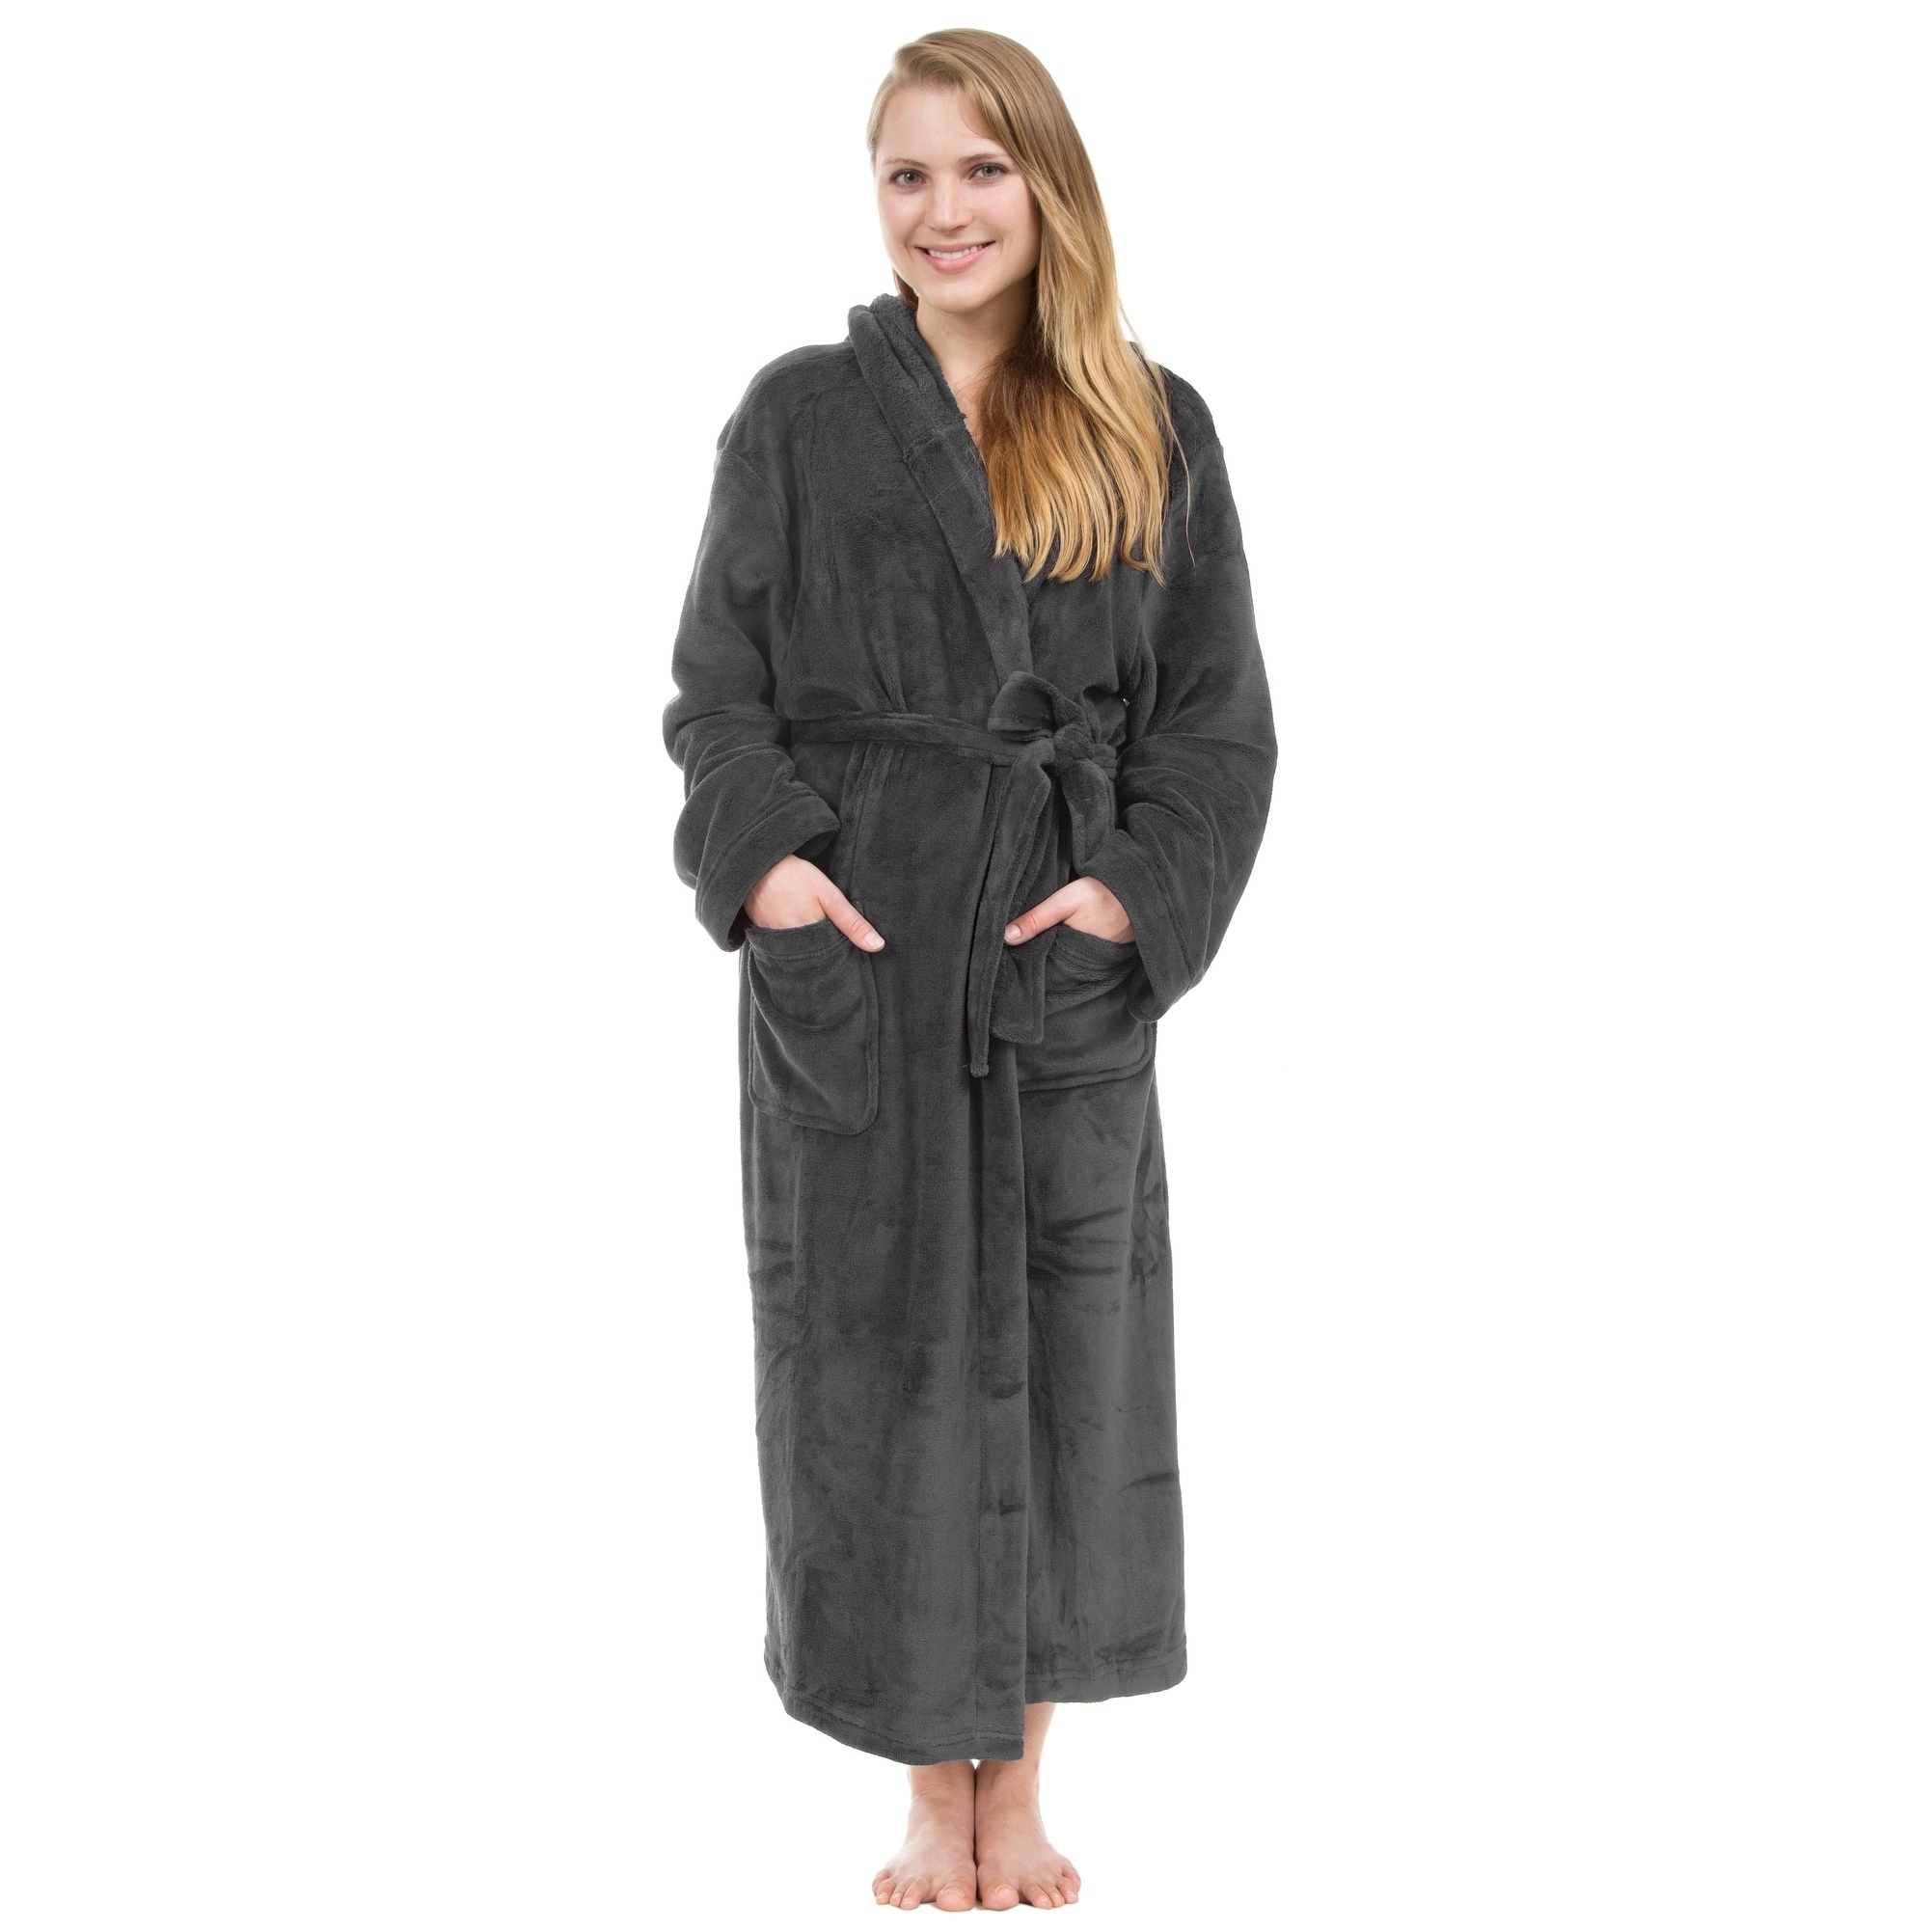 AMDBEL Robes for Women Fuzzy Long Womens Hooded Plush Soft Fleece